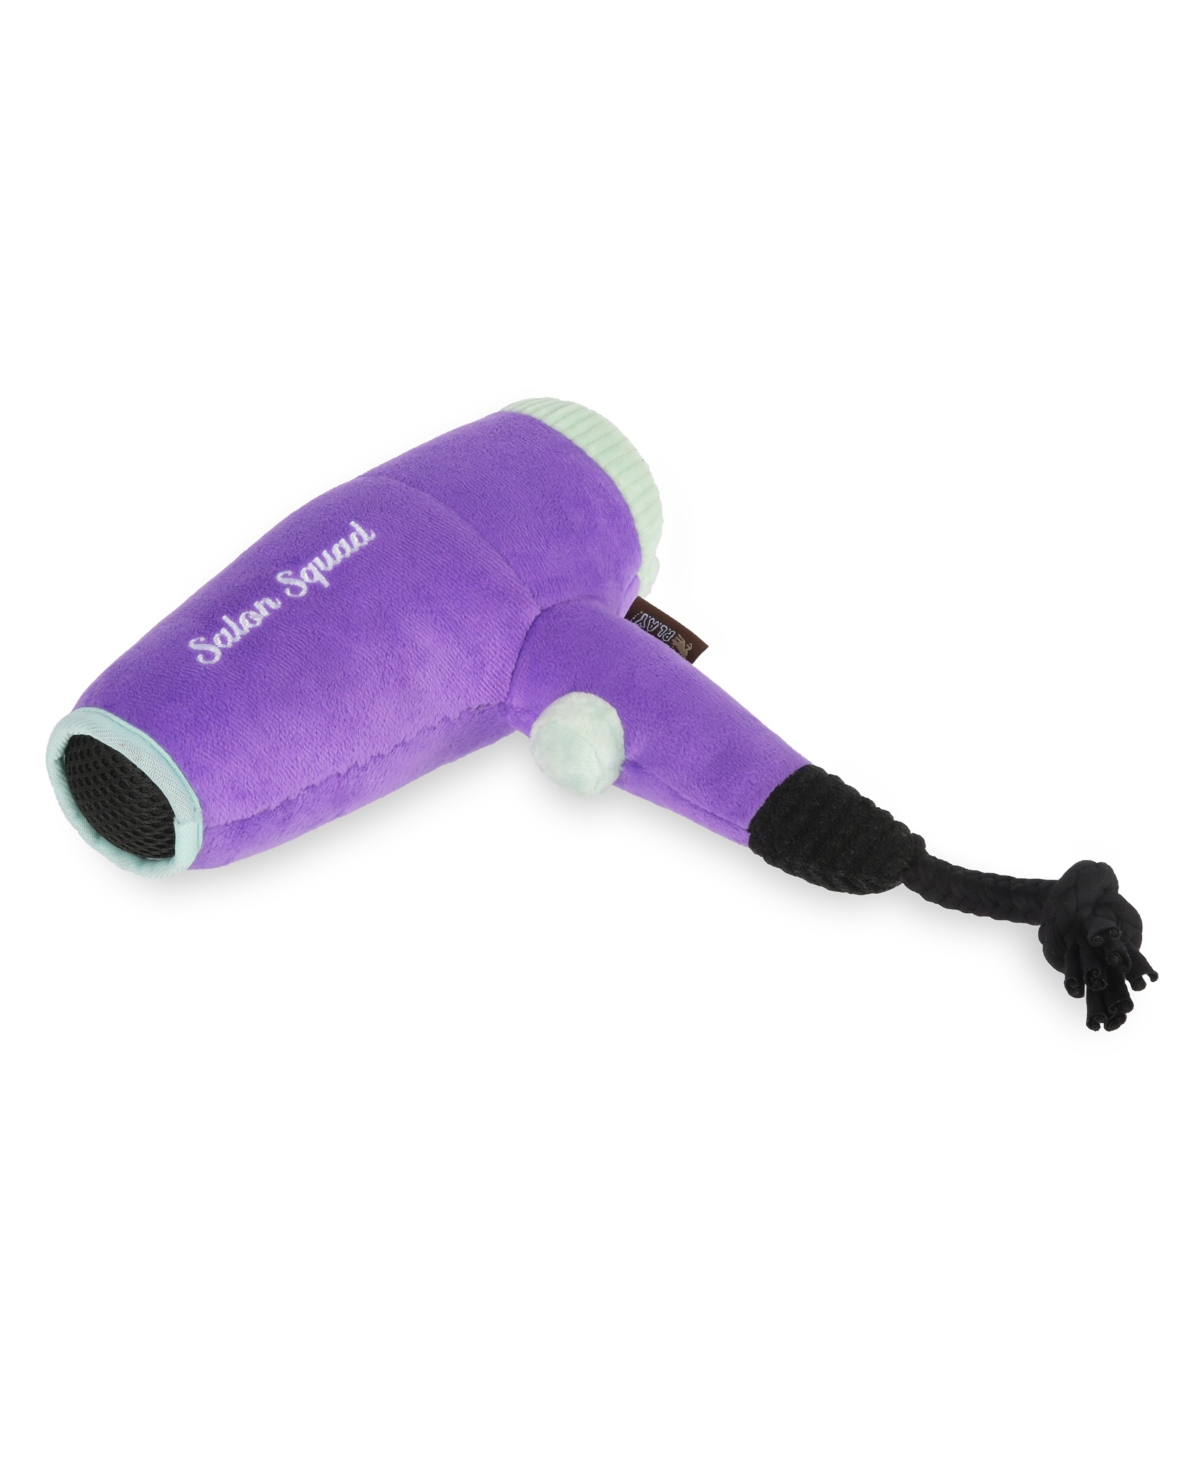 Plush Toy- Howlin' Hair Dryer Plush Dog Toy - Purple